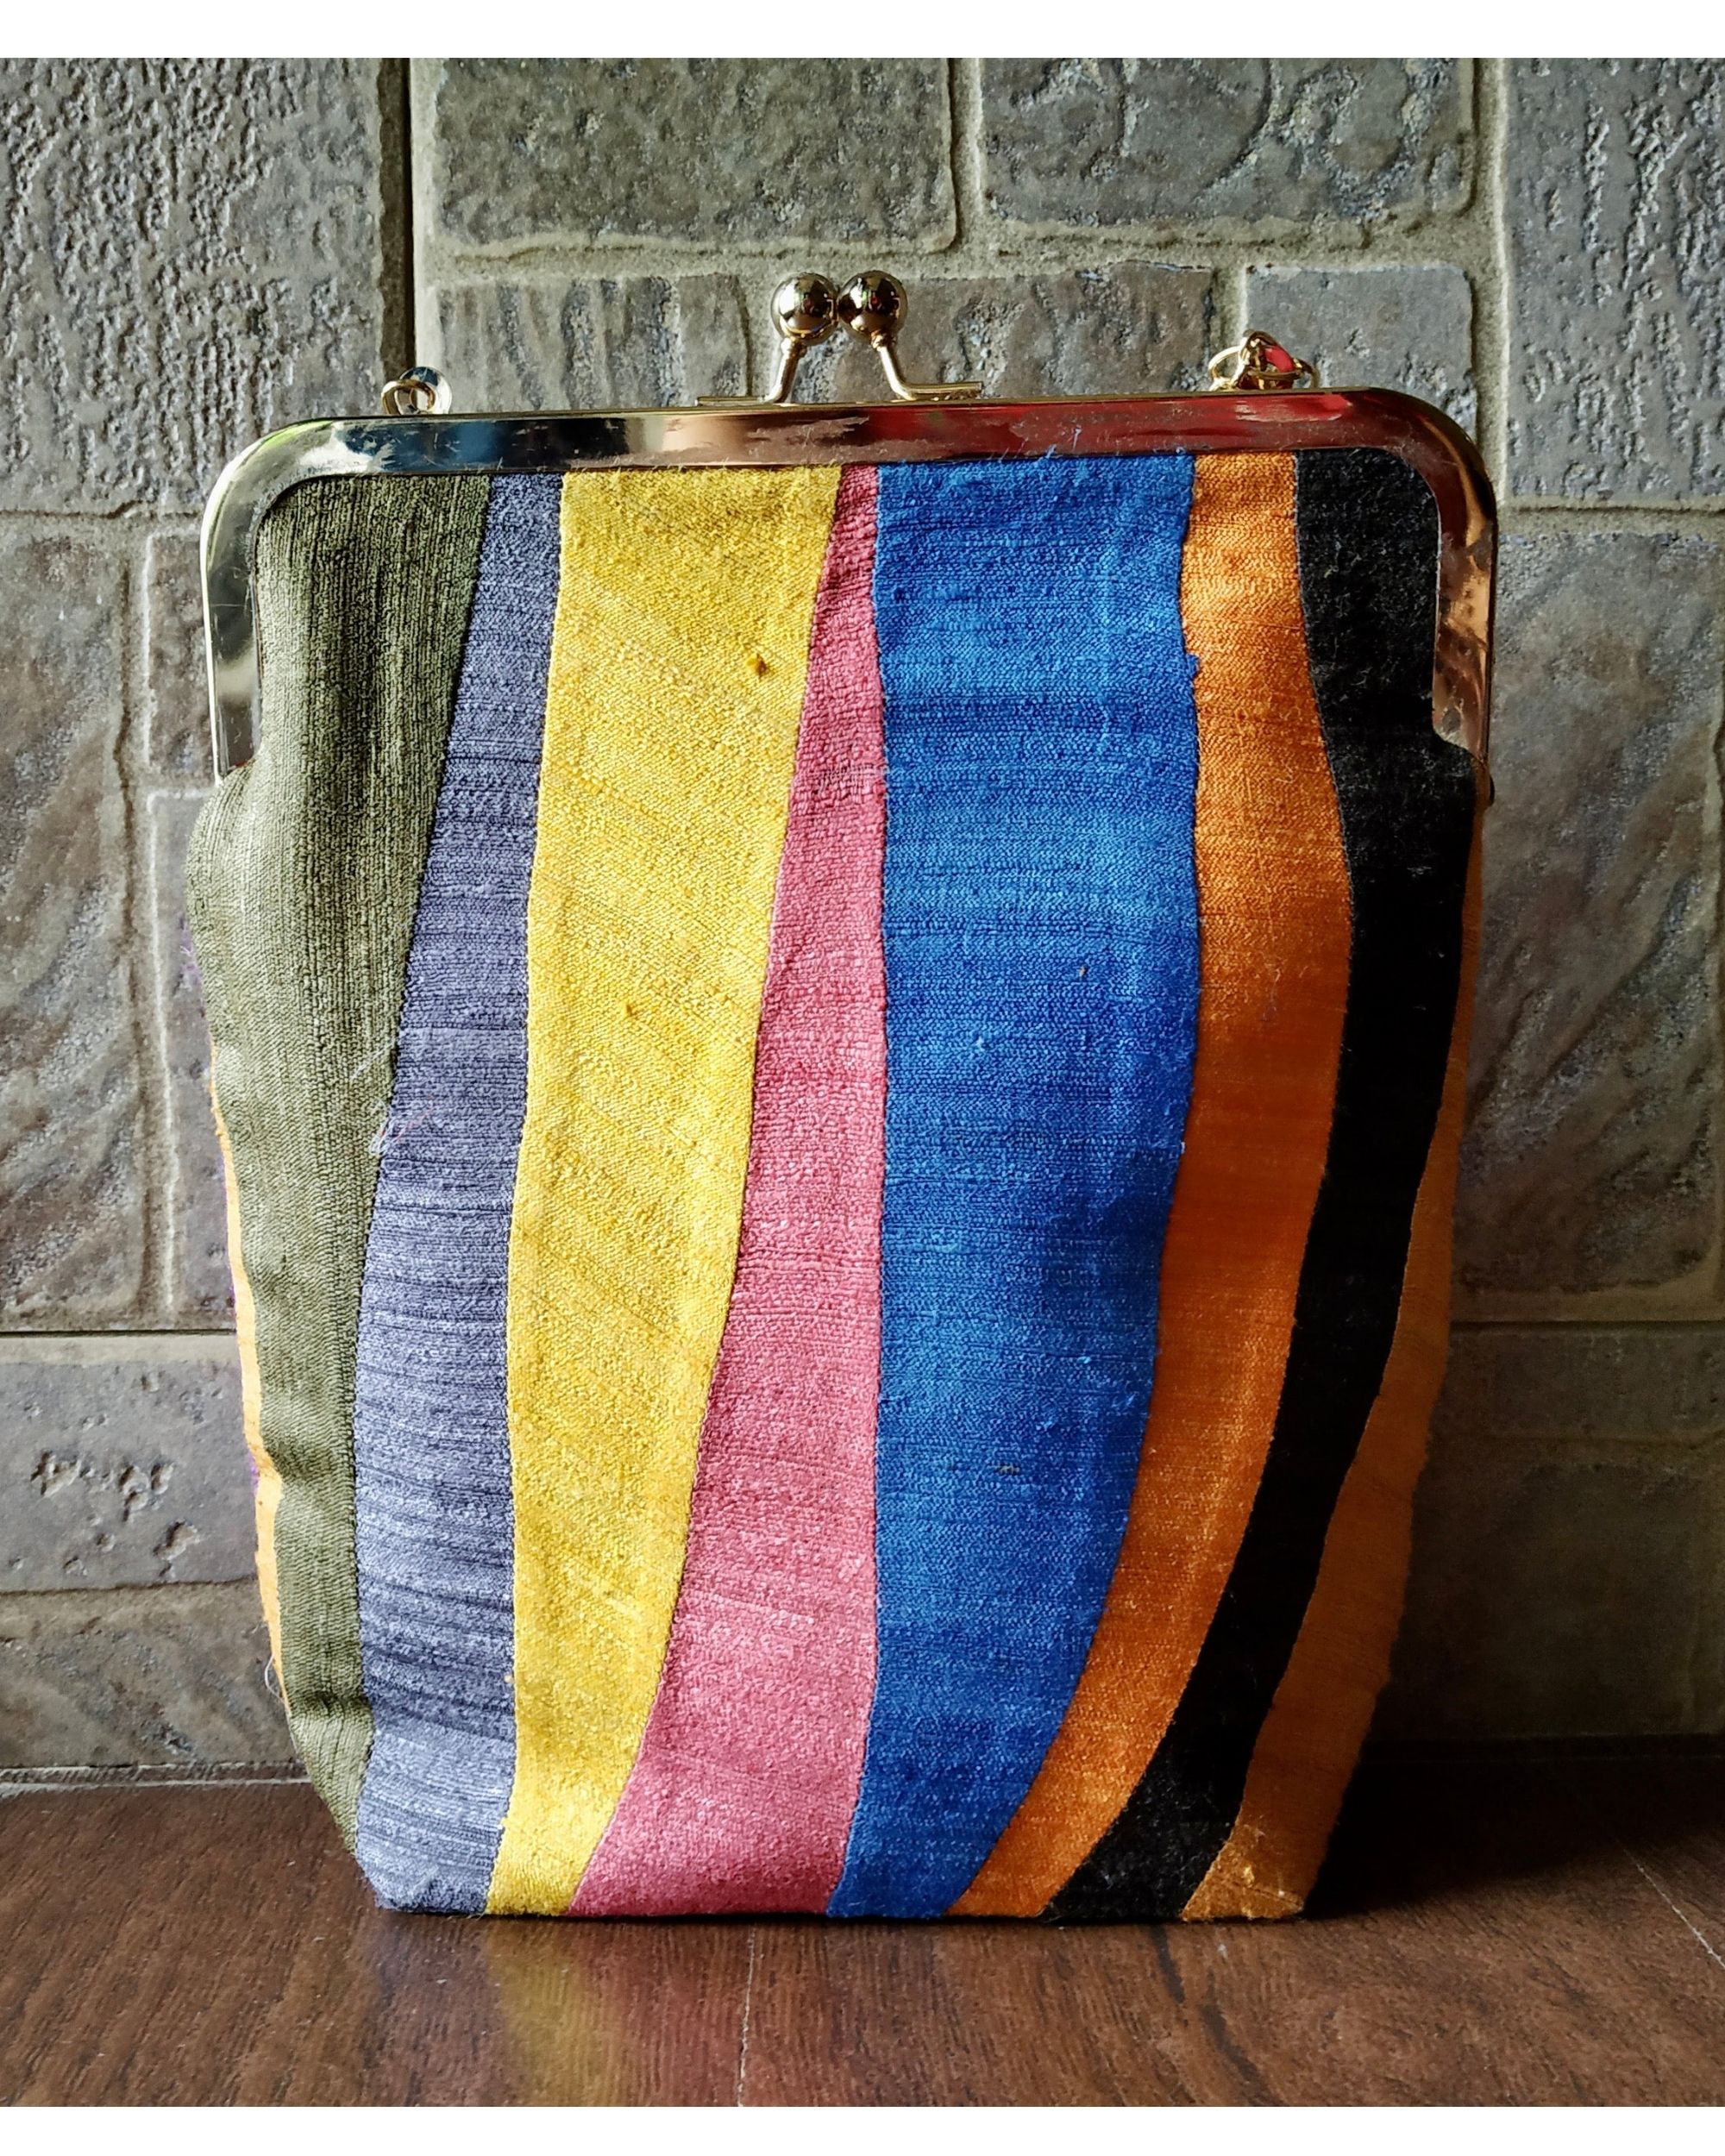 Vince Camuto Orla Tote Sunset Stripe Multi Colored Rainbow Purse Pocketbook  | Rainbow purses, Purses, Tote